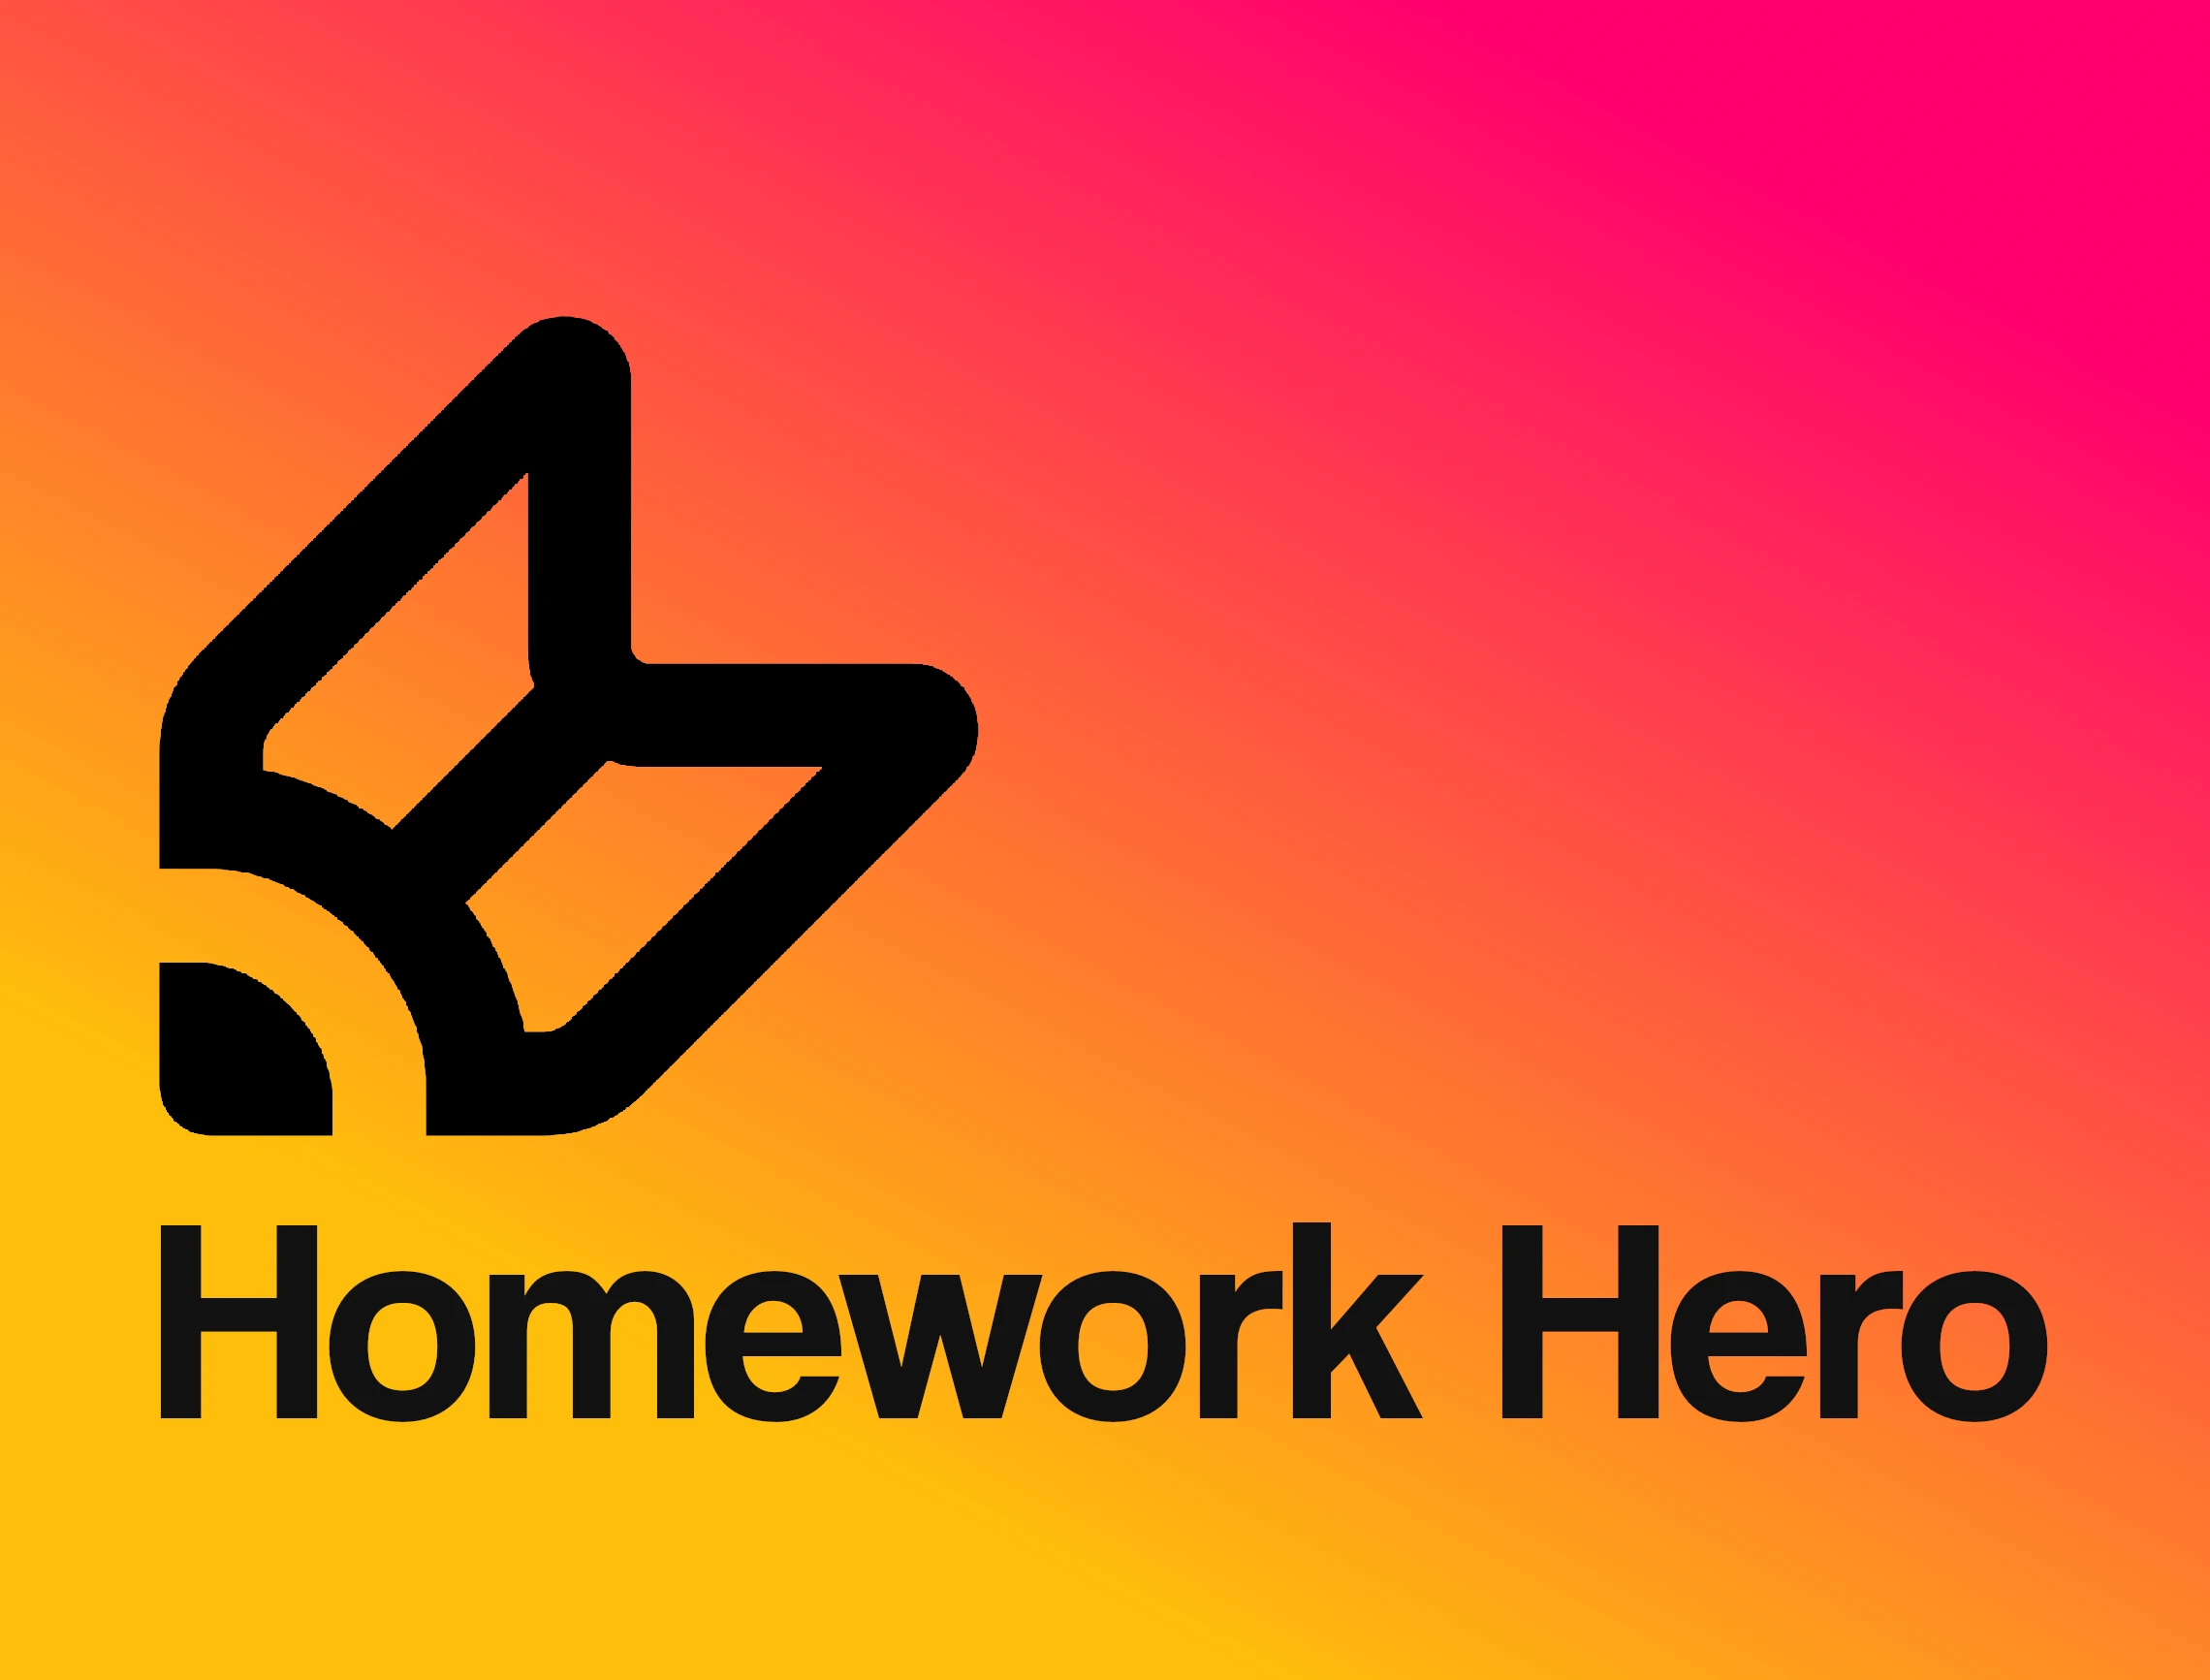 homework hero logo image